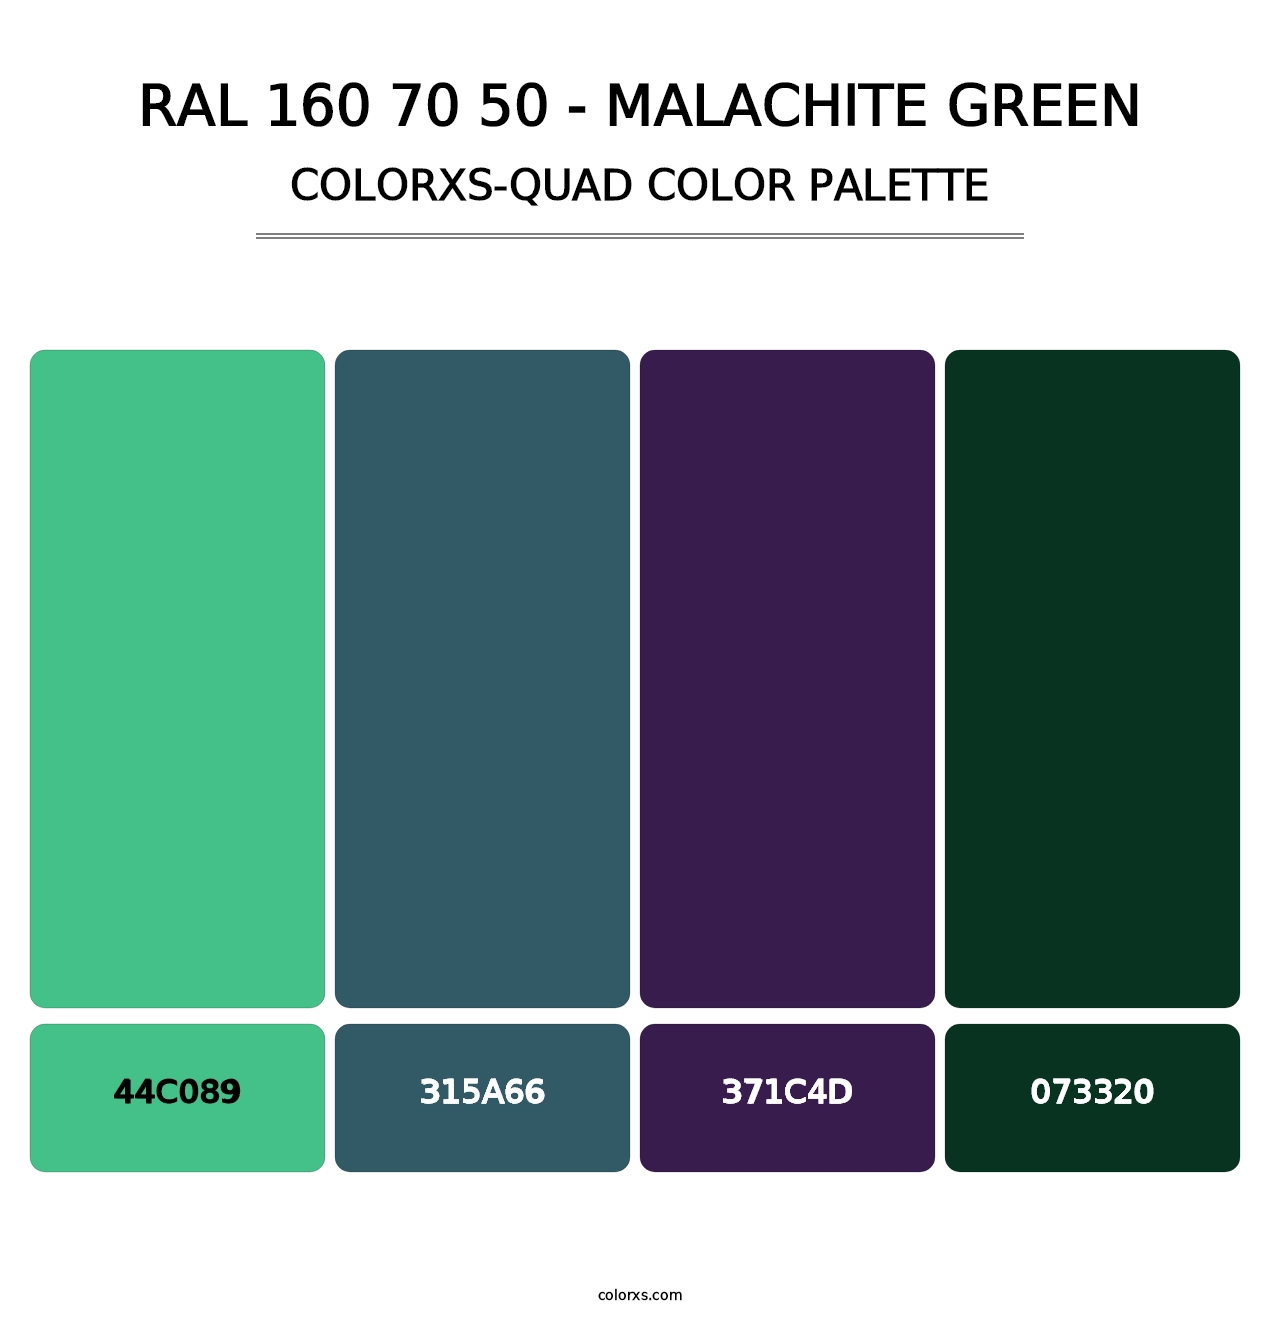 RAL 160 70 50 - Malachite Green - Colorxs Quad Palette